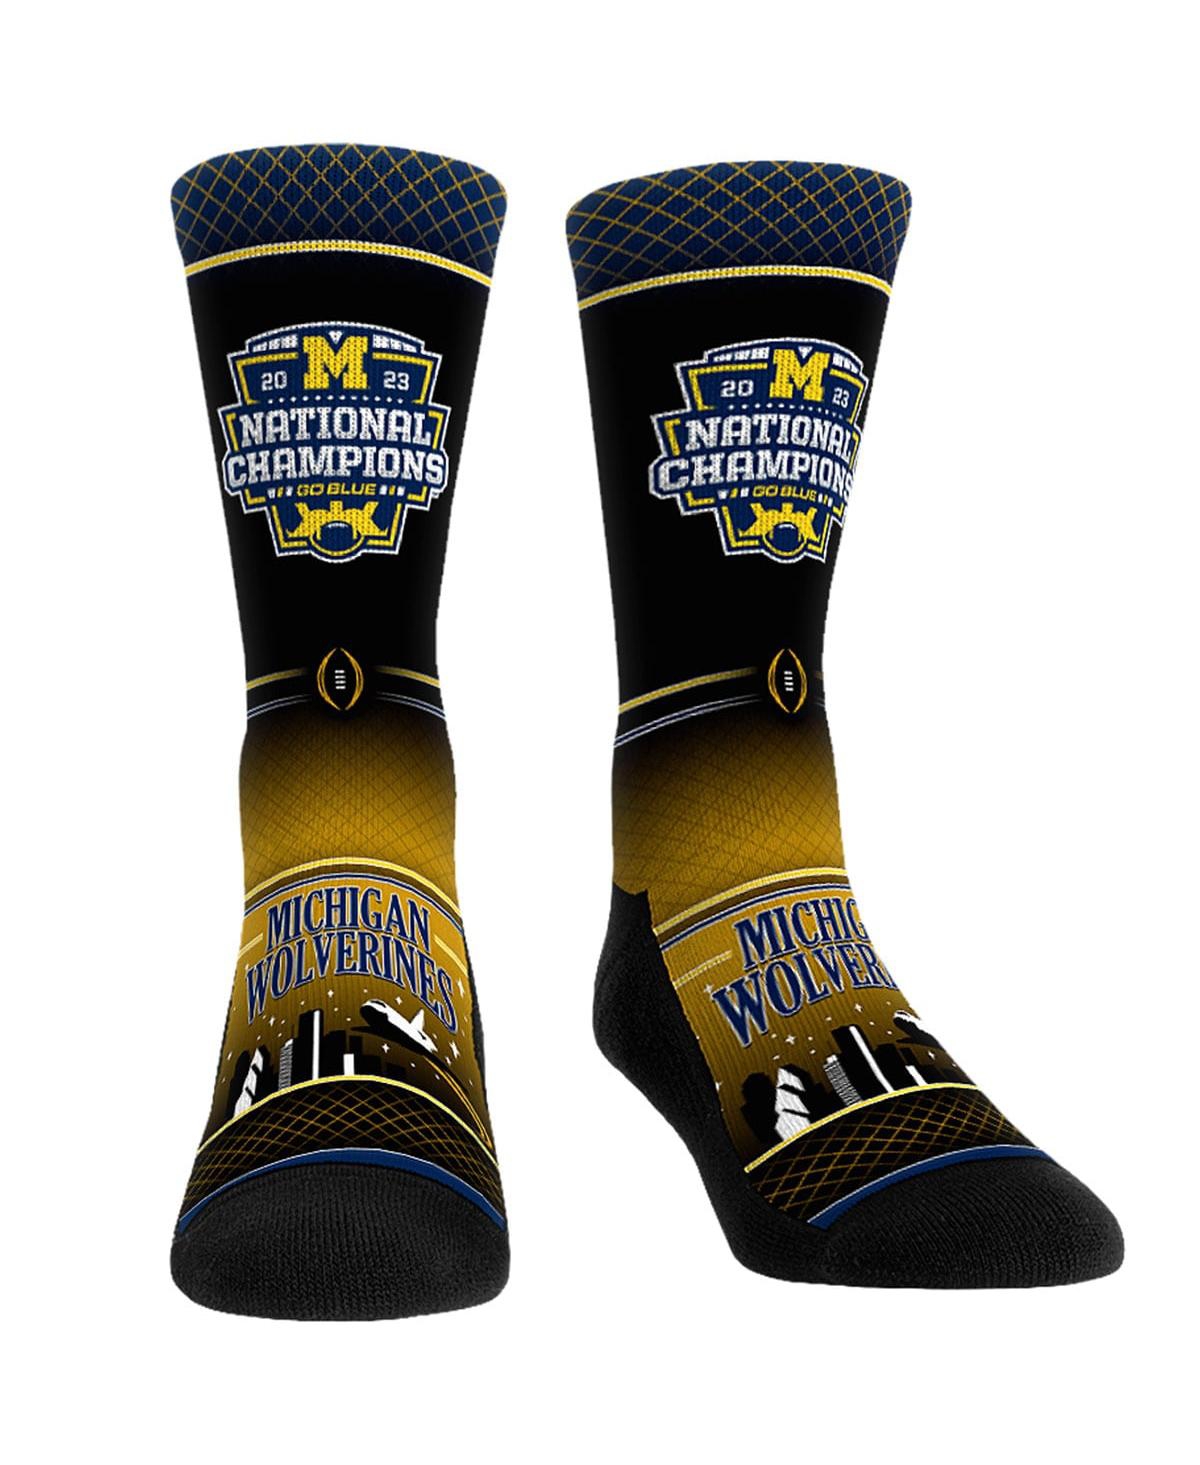 Men's and Women's Rock 'Em Socks Navy Michigan Wolverines College Football Playoff 2023 National Champions Crew Socks - Navy